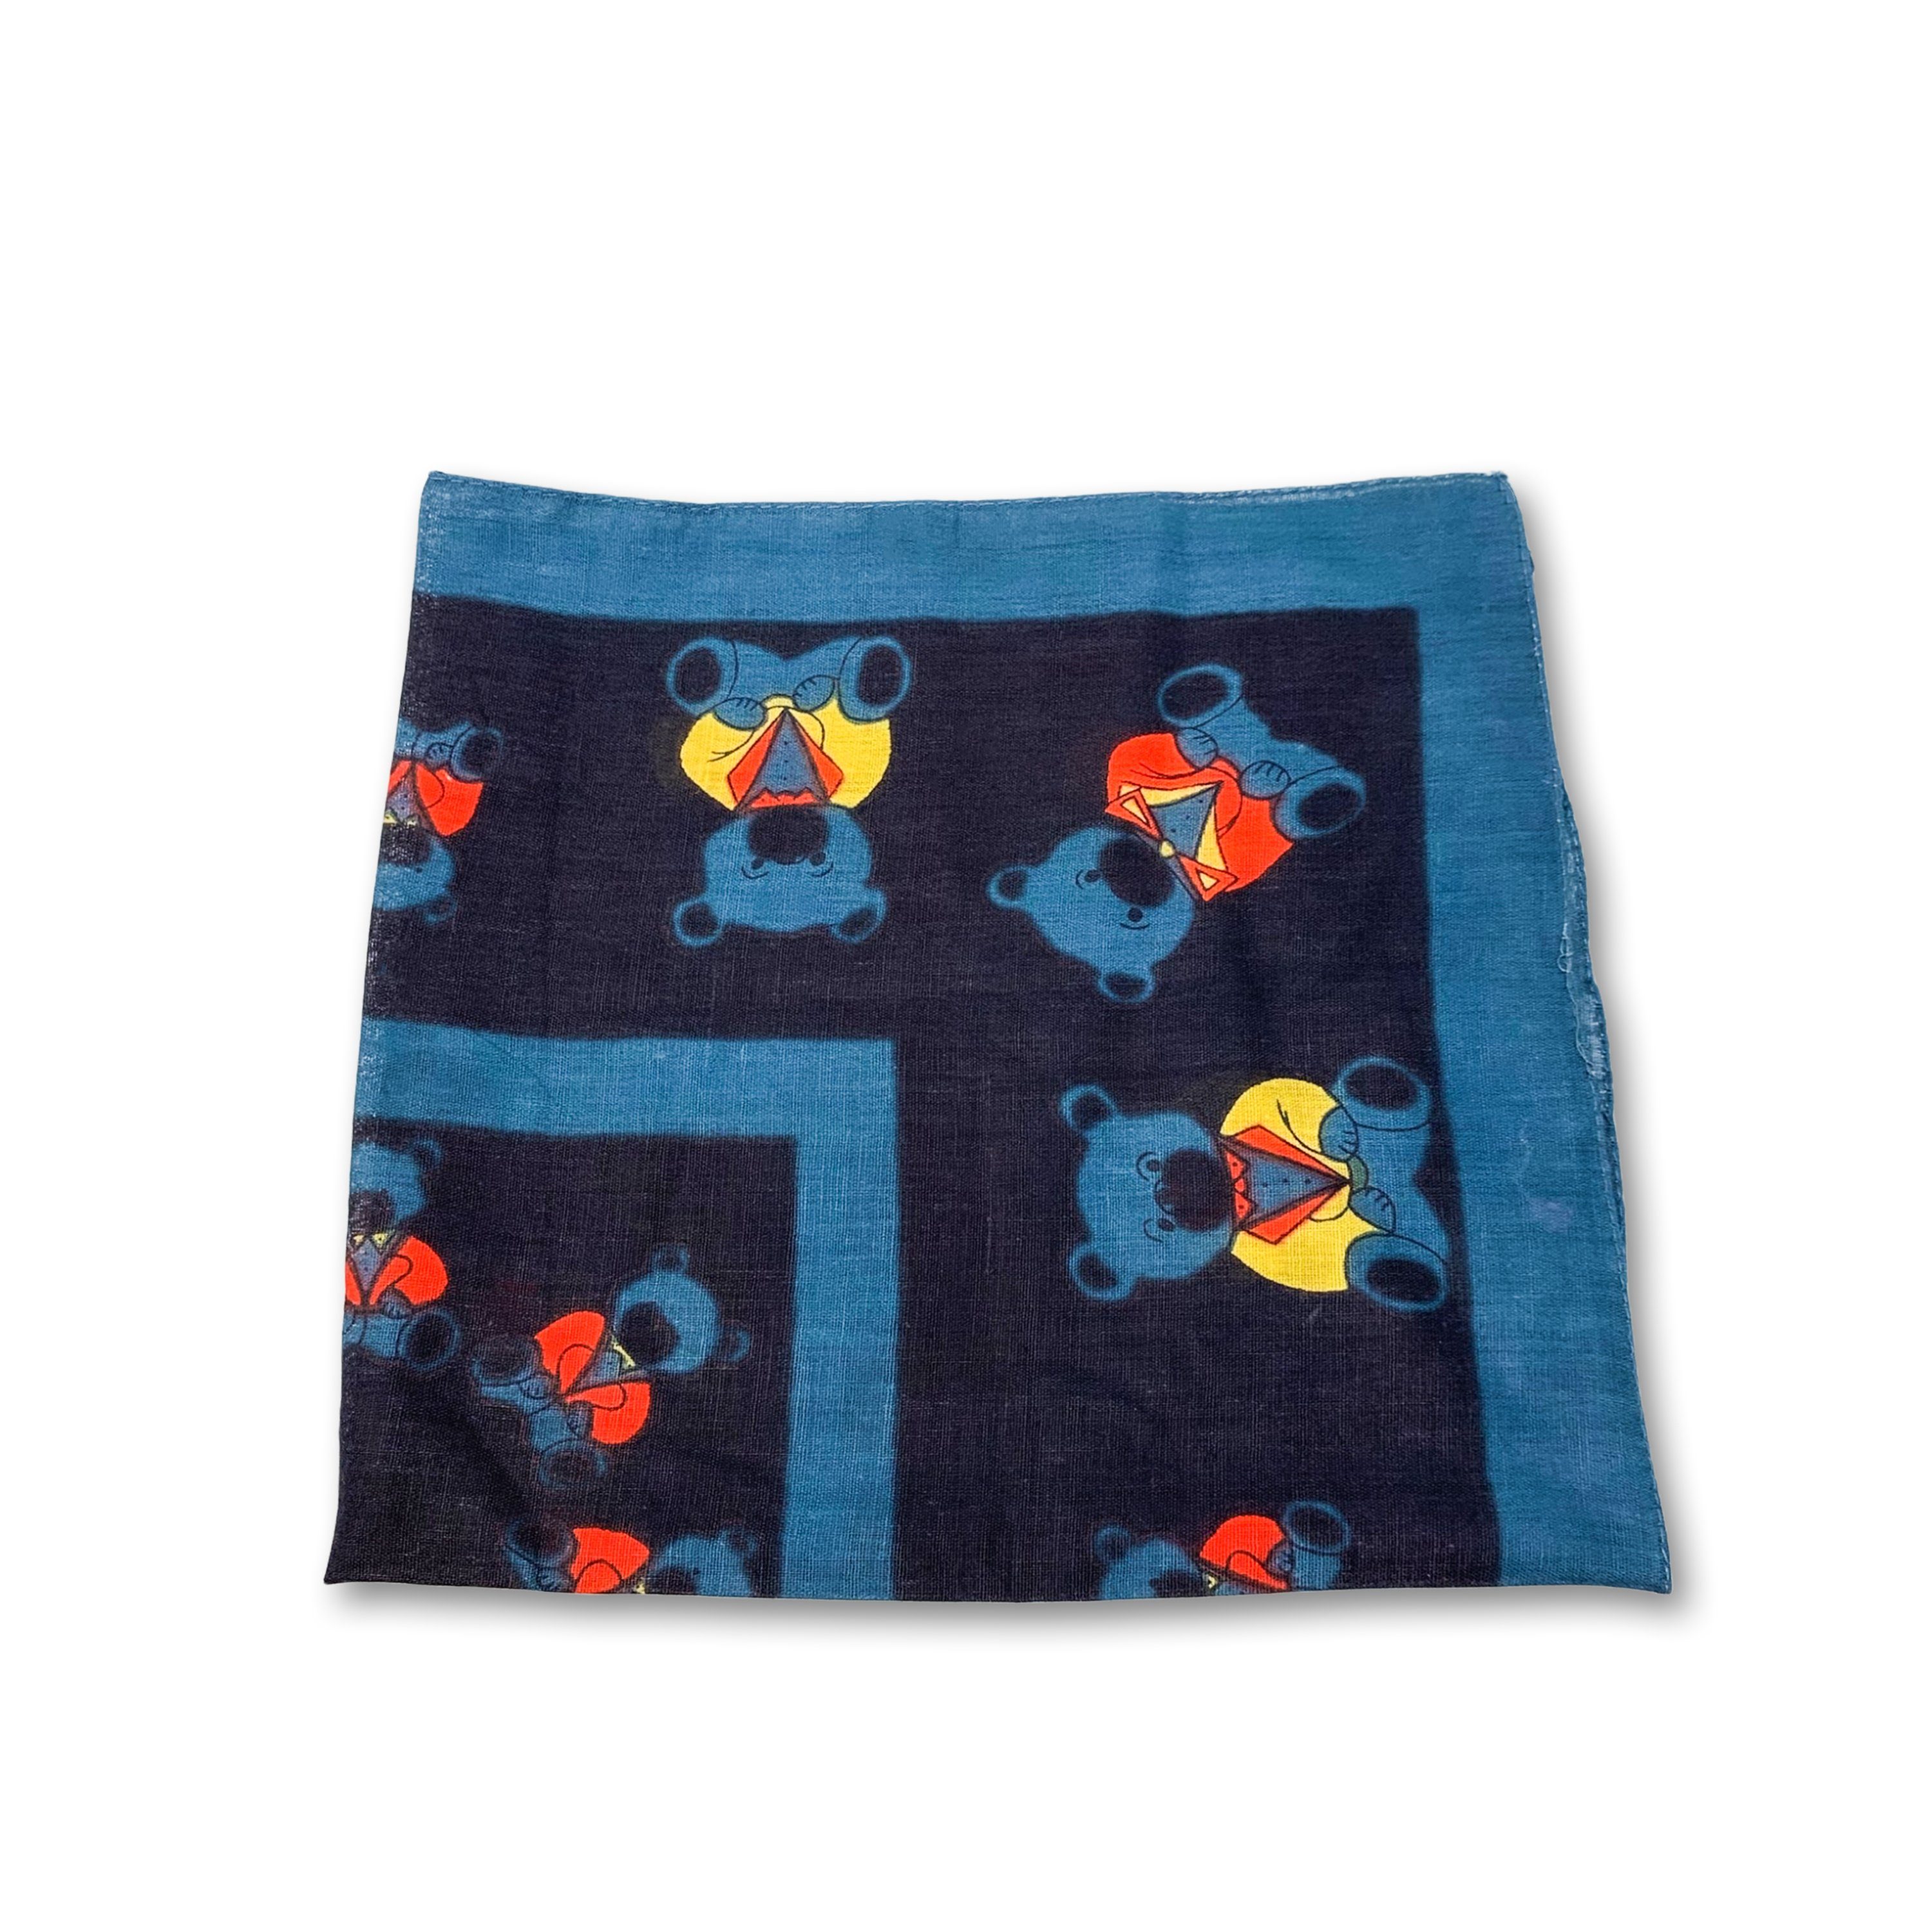 Friseurmeister Halstuch Schal Basic 50cm x 50cm - leichte tücher scarf halstücher halsband Dunkel Blau Bärchen Muster